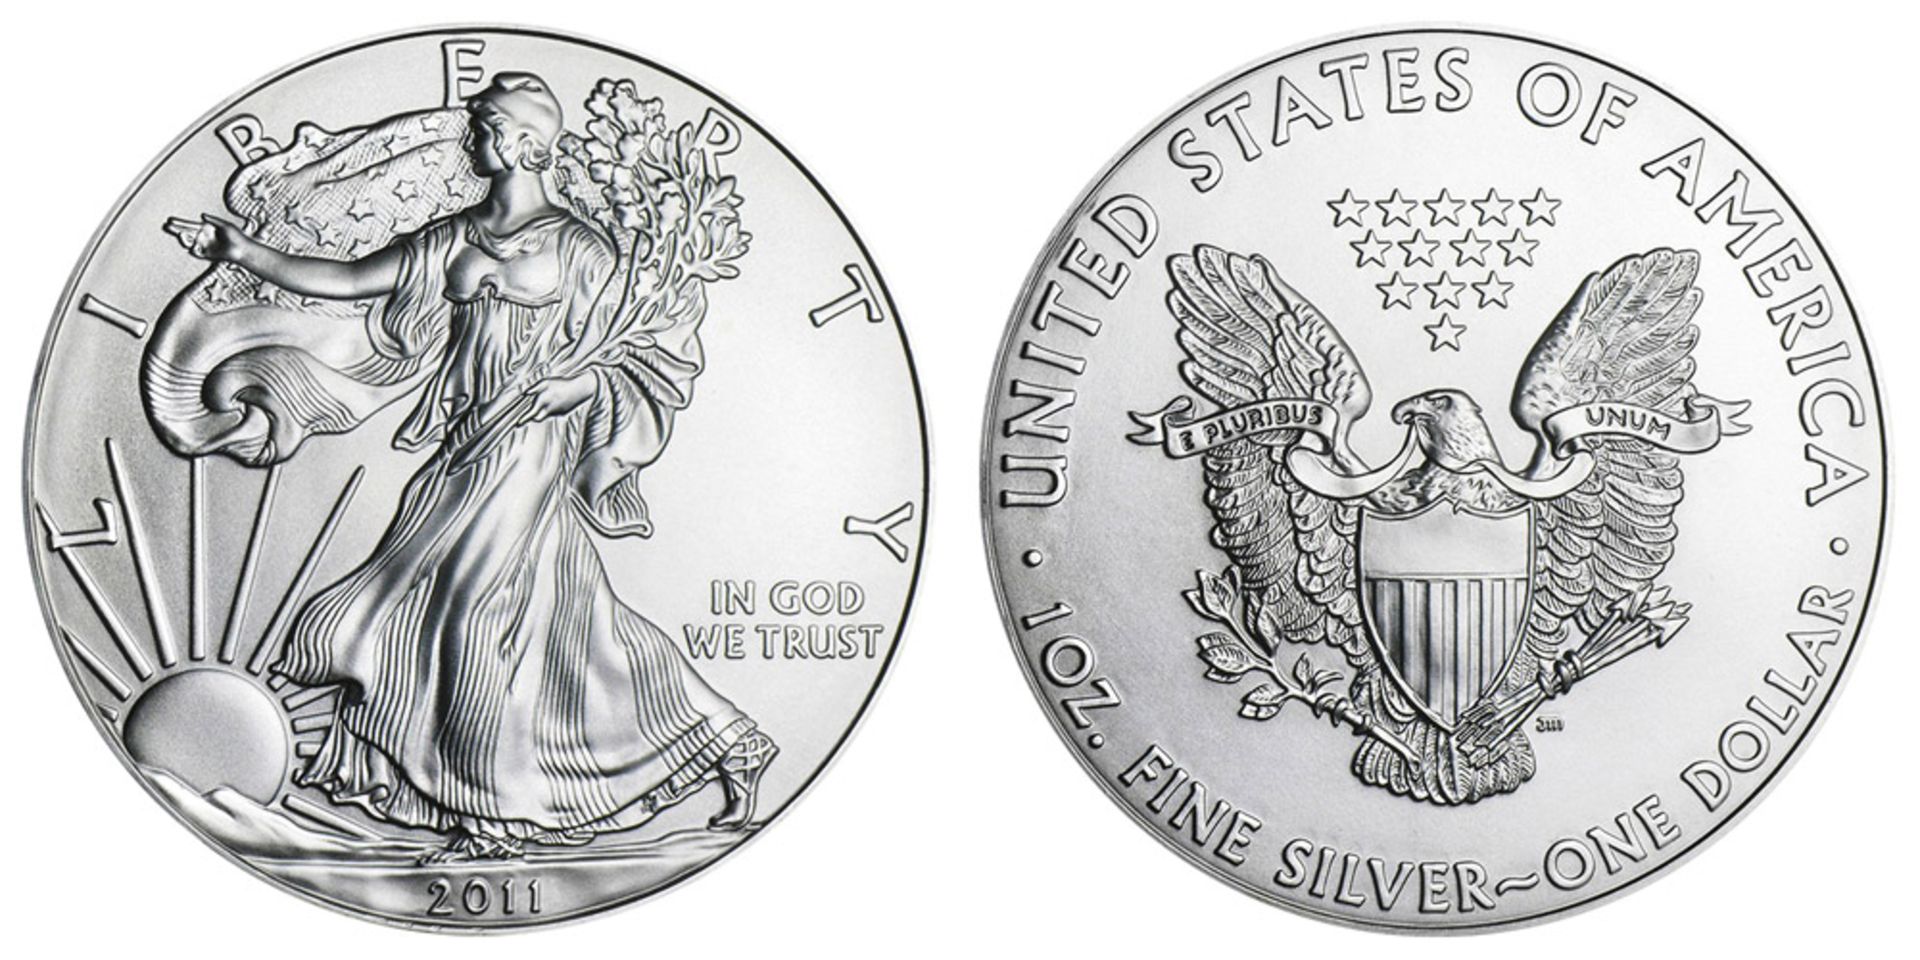 2011 American Silver Eagle .999 Fine Silver Dollar Coin - Image 2 of 2